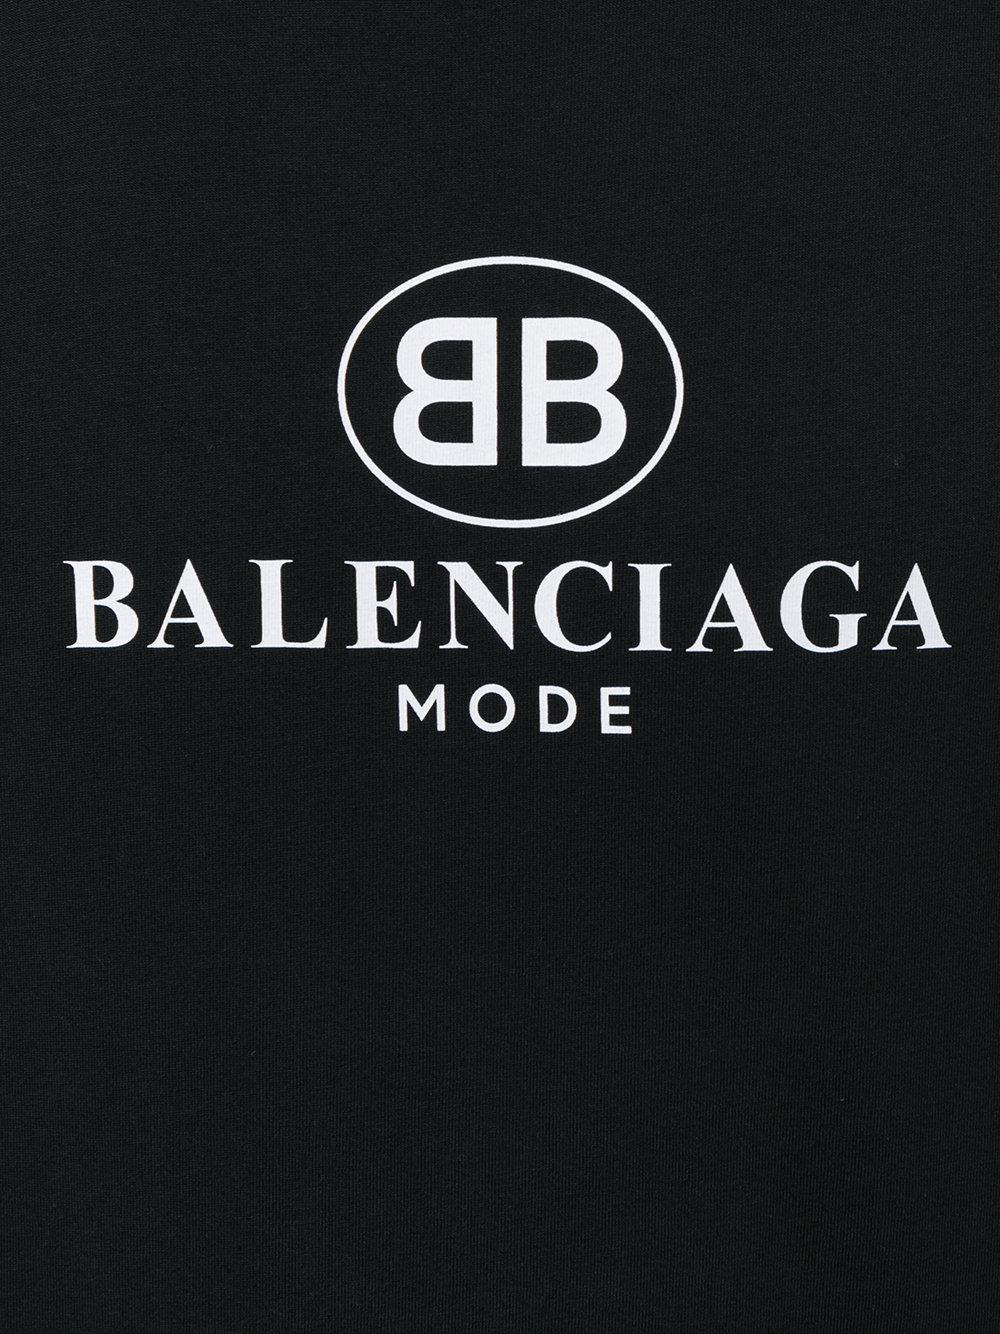 Download Lyst - Balenciaga Logo Print Cotton T-shirt in Black for Men